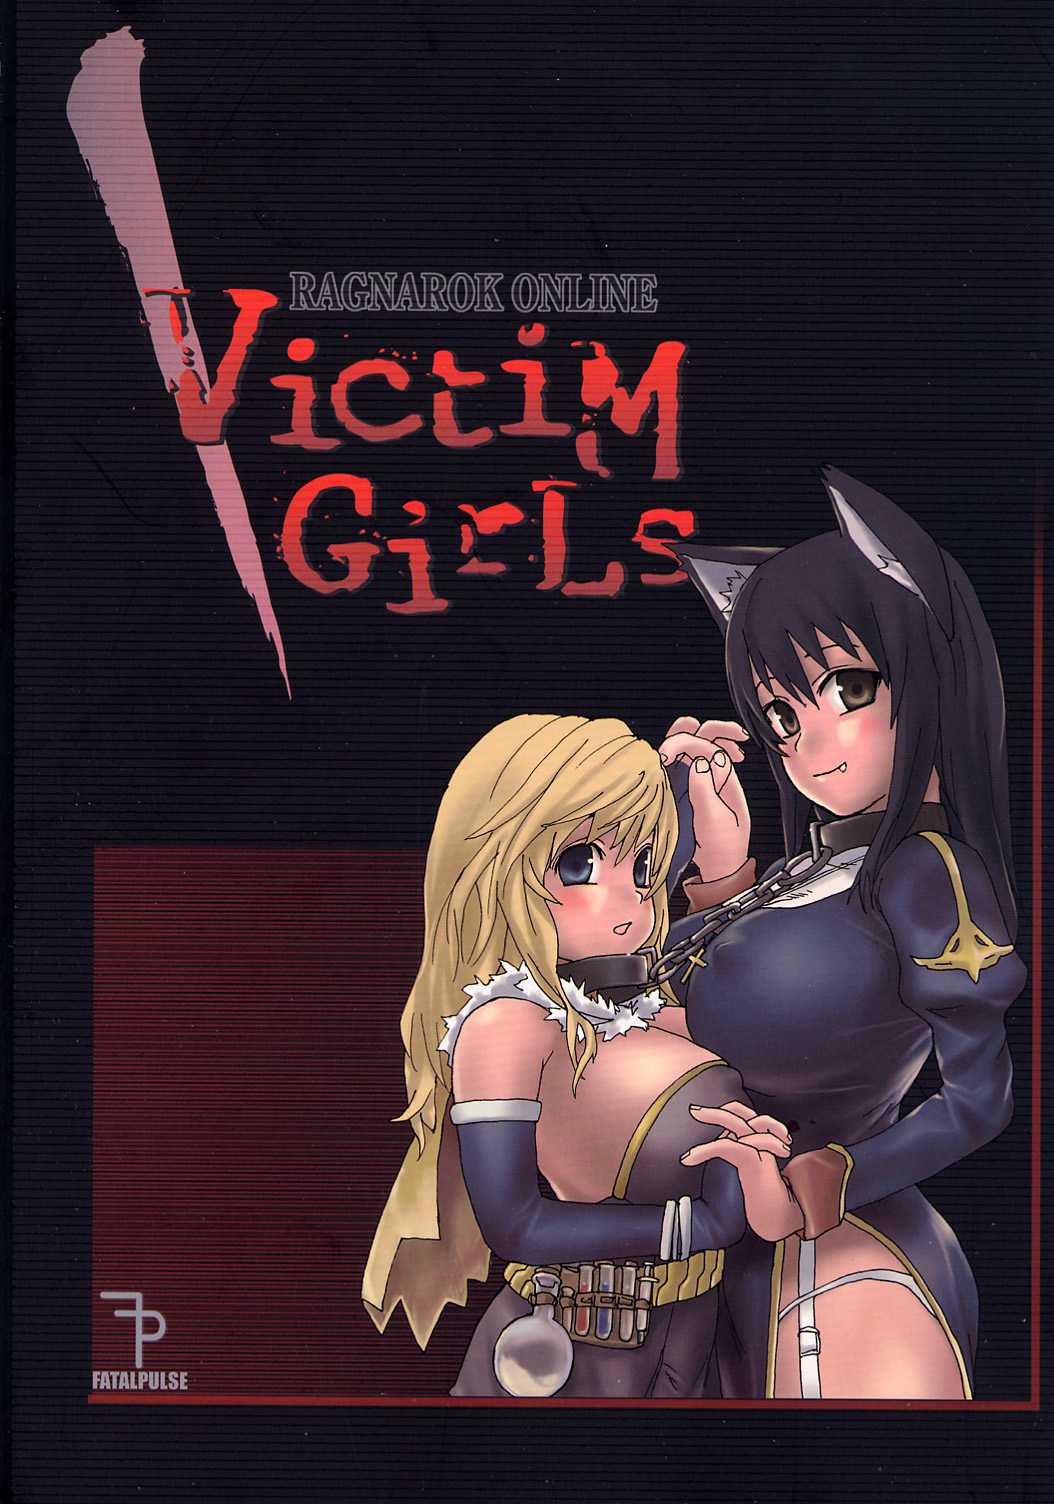 [Fatal Pulse] Victim Girls 1 (Ragnarok Online) (BR) 